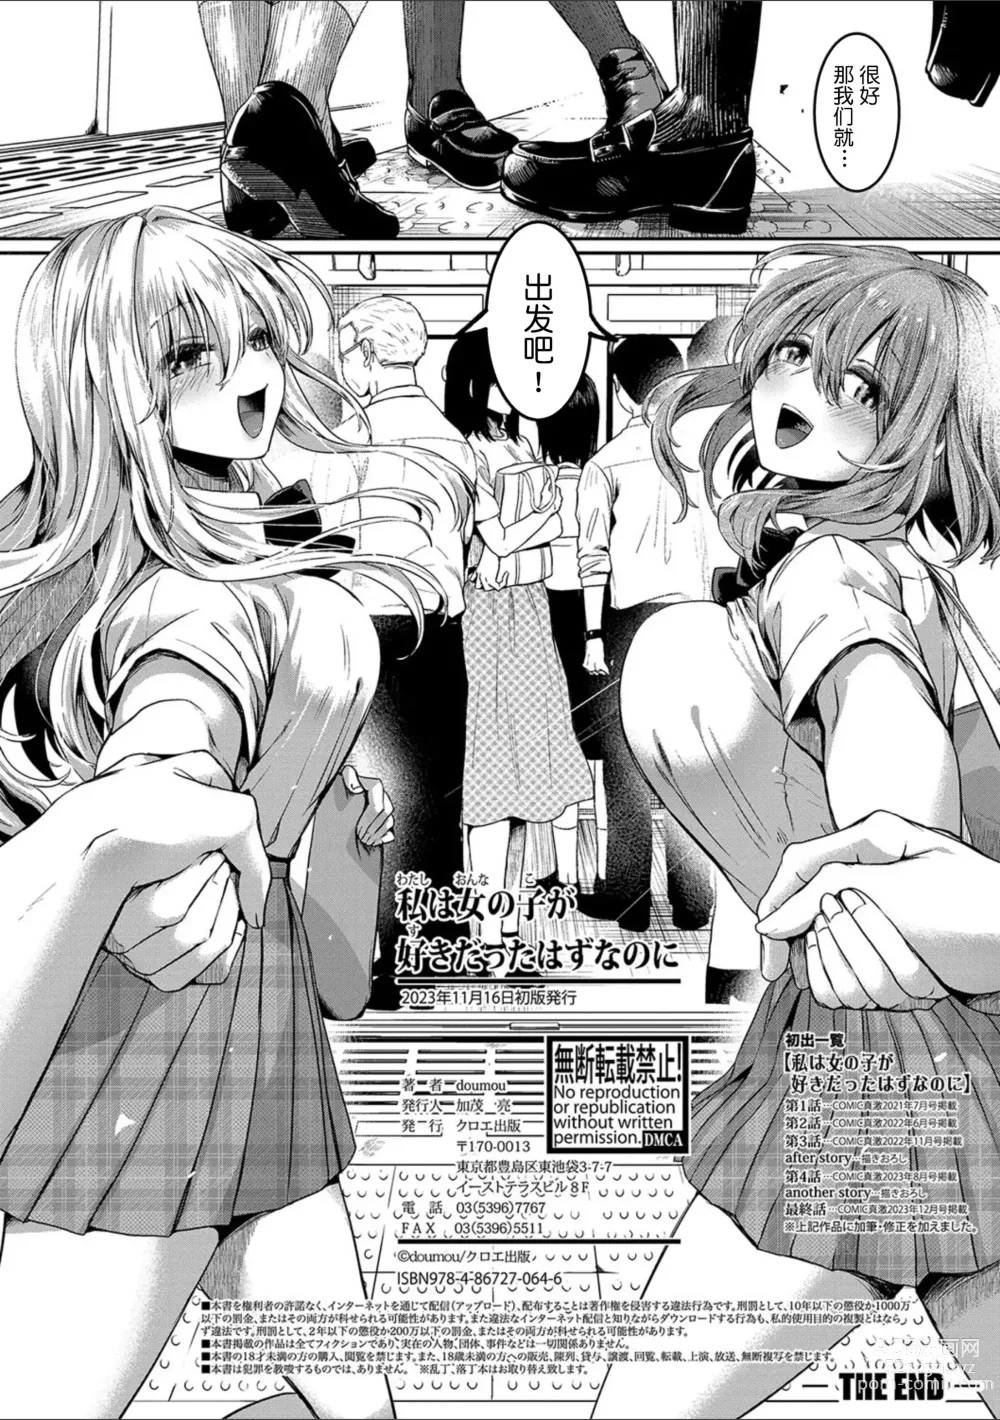 Page 207 of manga Watashi wa Onnanoko ga Suki datta Hazu nano ni - But I fell in with something different.